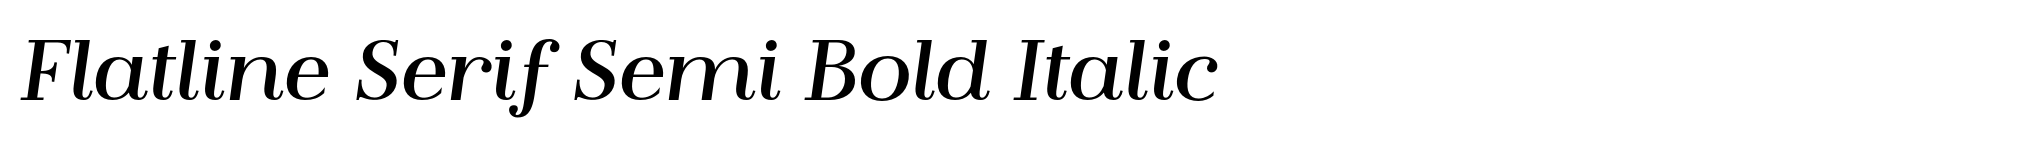 Flatline Serif Semi Bold Italic image